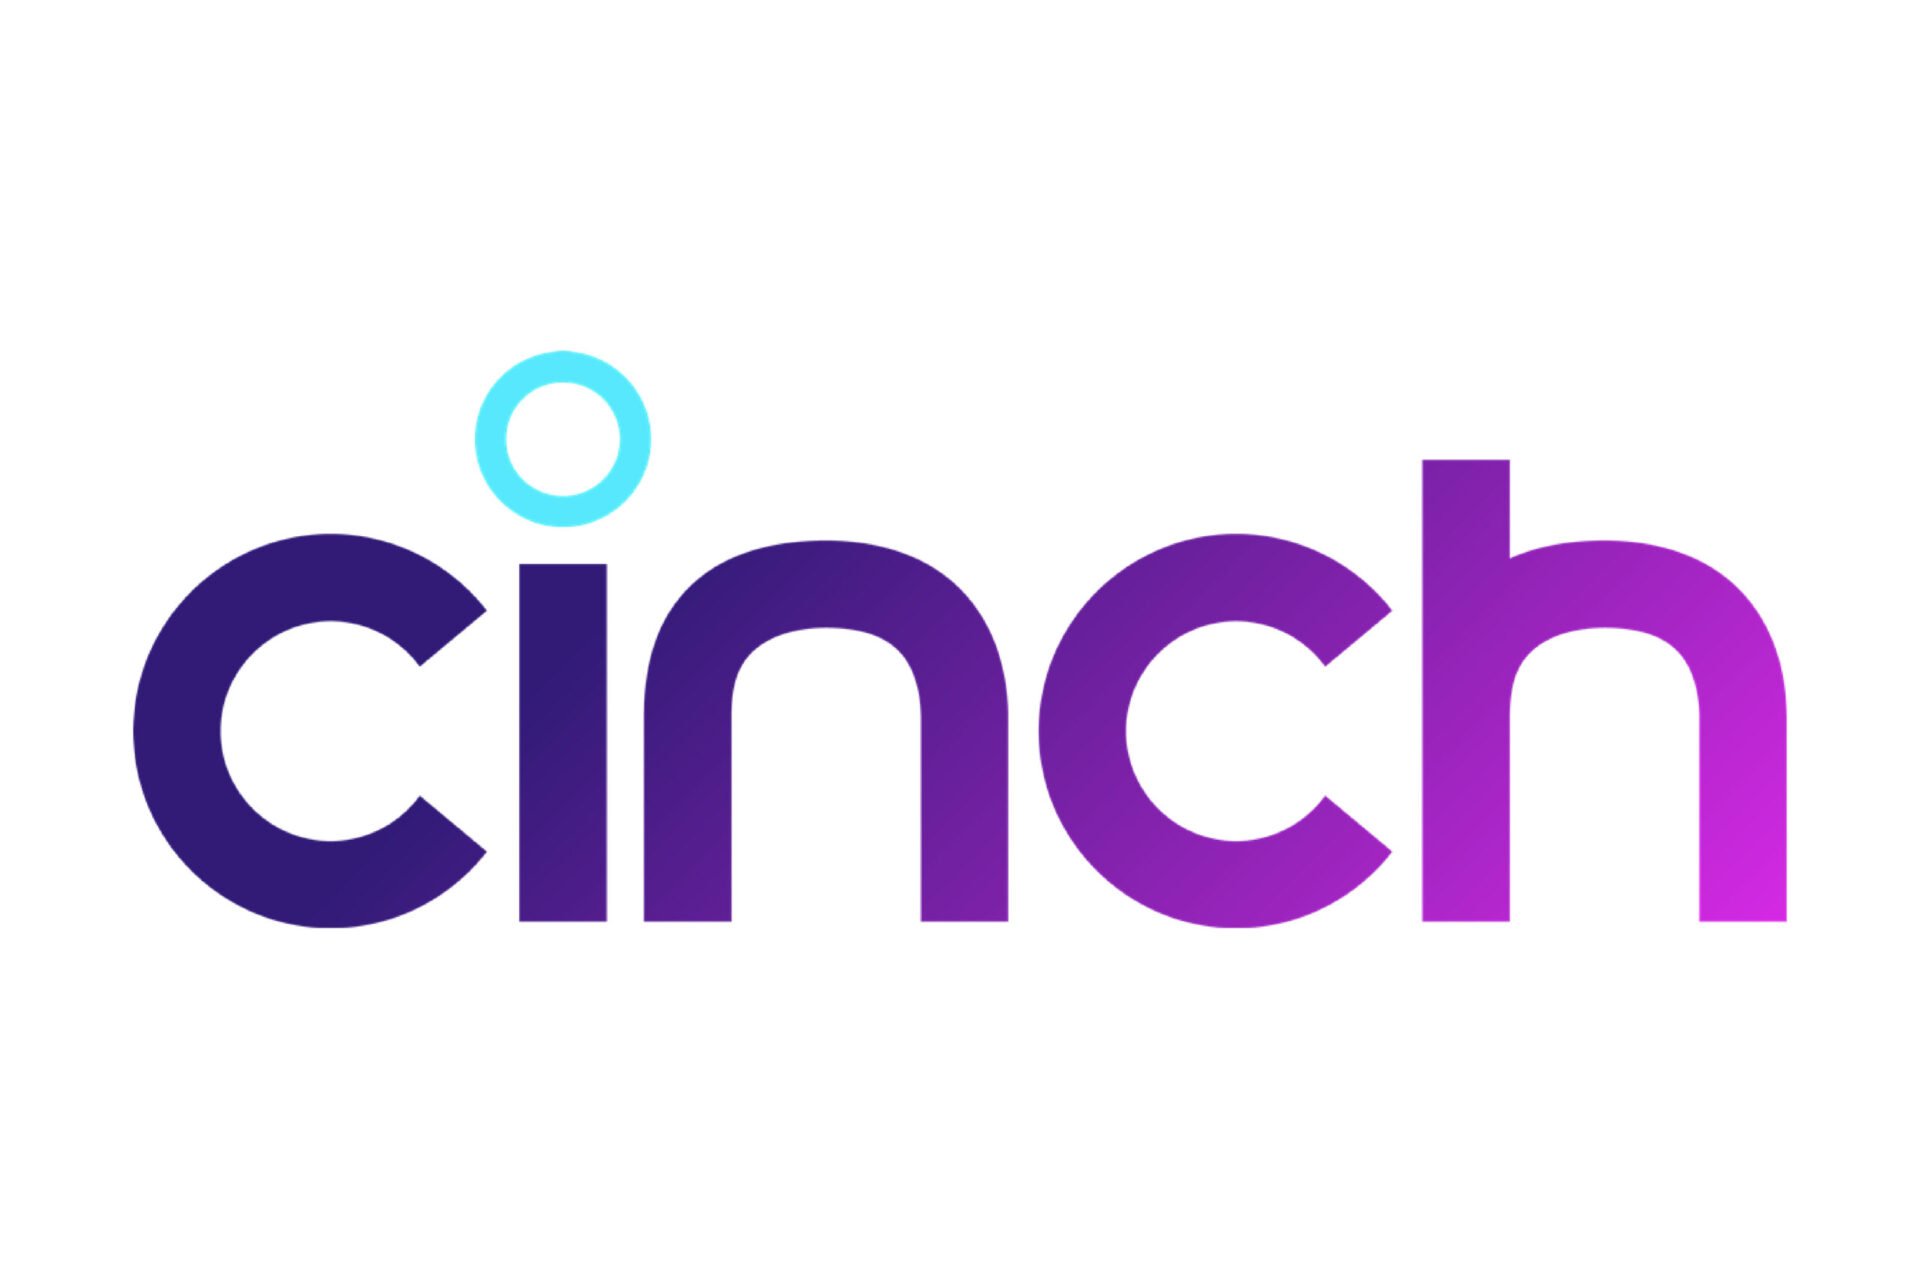 Cinch raises £1bn funding as owners plot European expansion plans